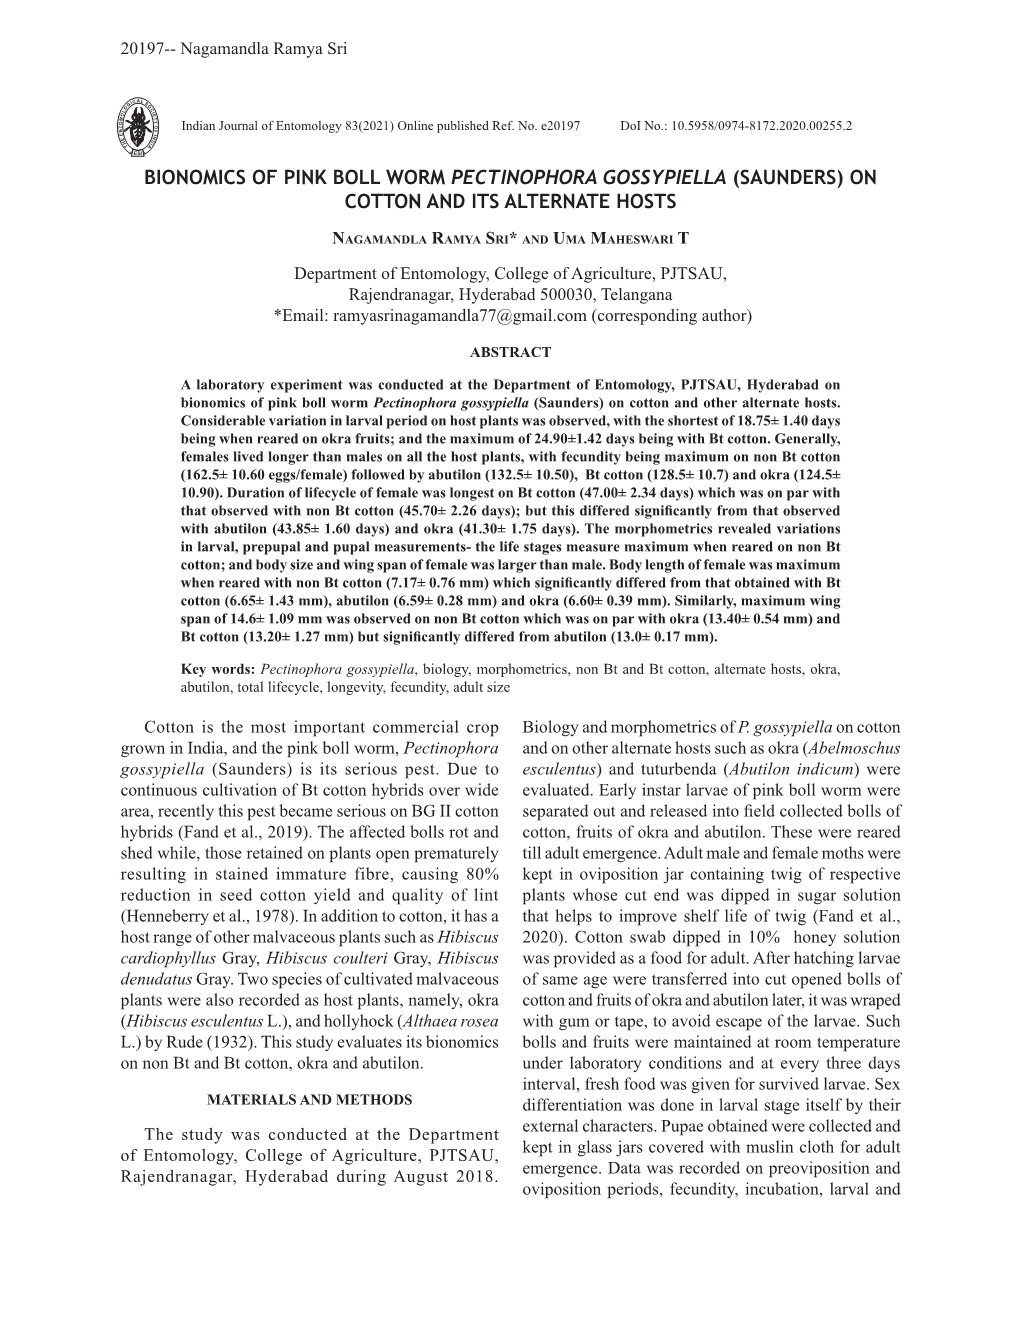 Bionomics of Pink Boll Worm Pectinophora Gossypiella (Saunders) on Cotton and Its Alternate Hosts